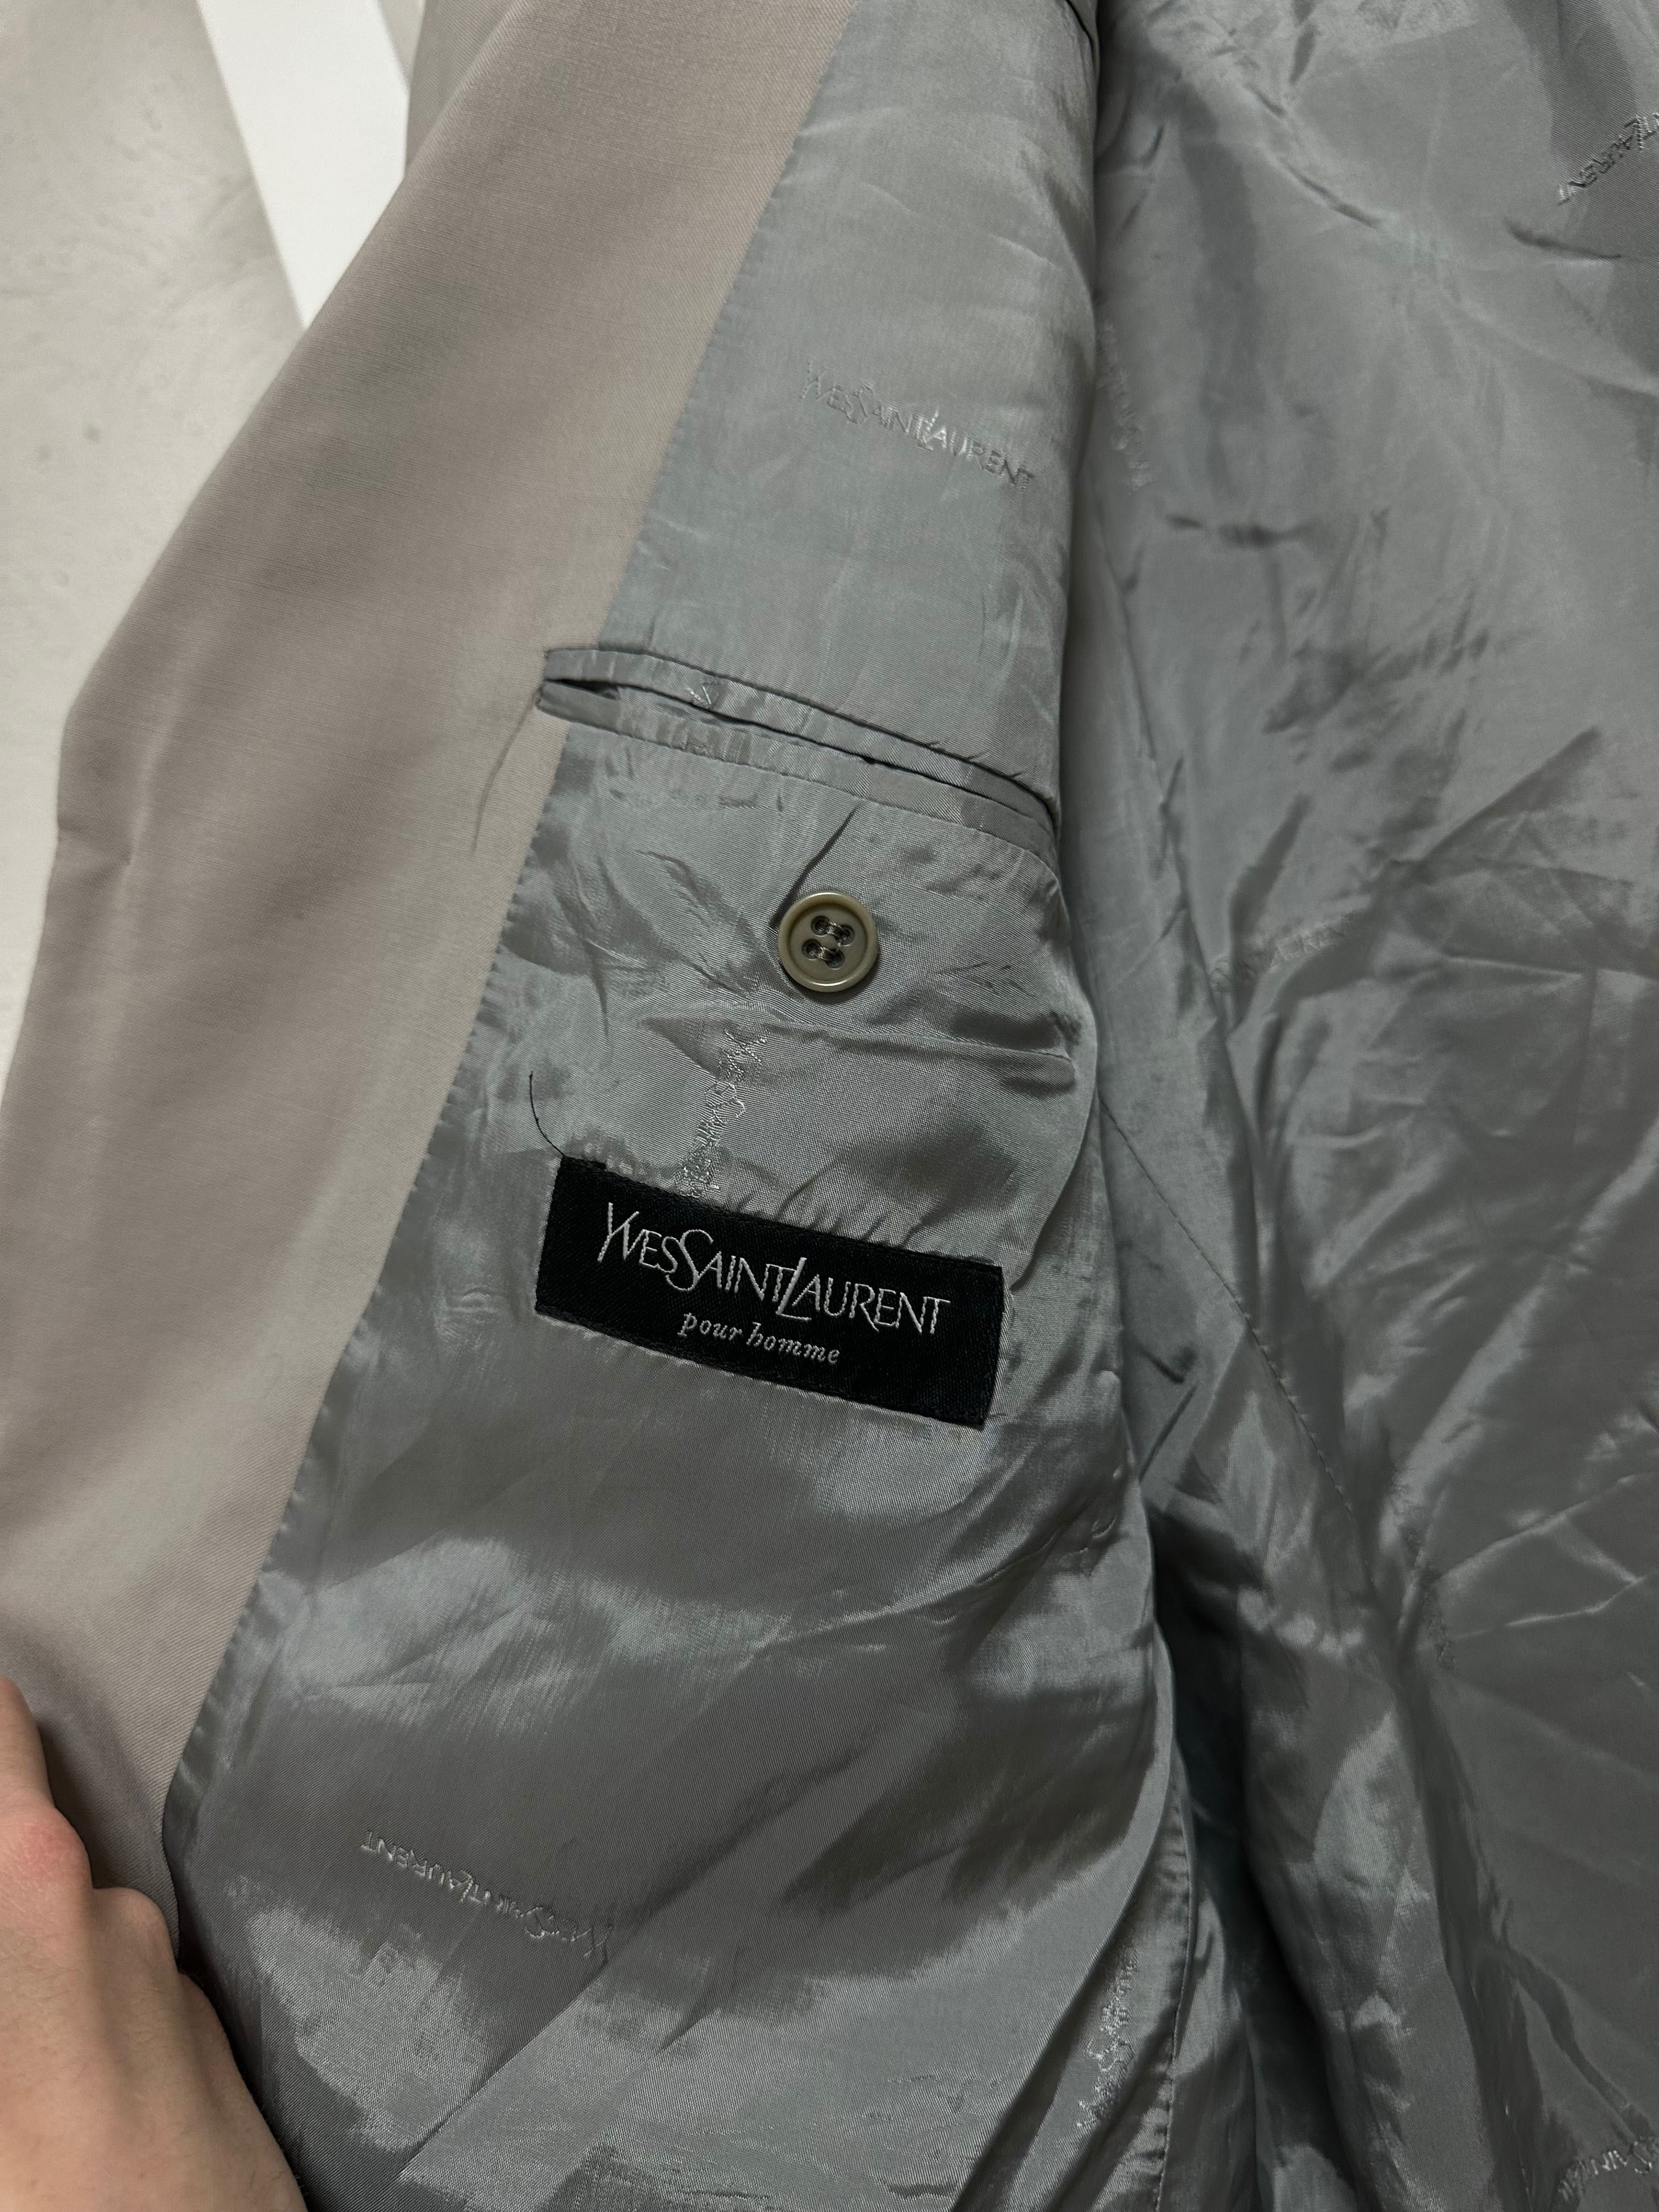 Мужской пиджак 100% лен винтажный yves saint laurent 54 размер